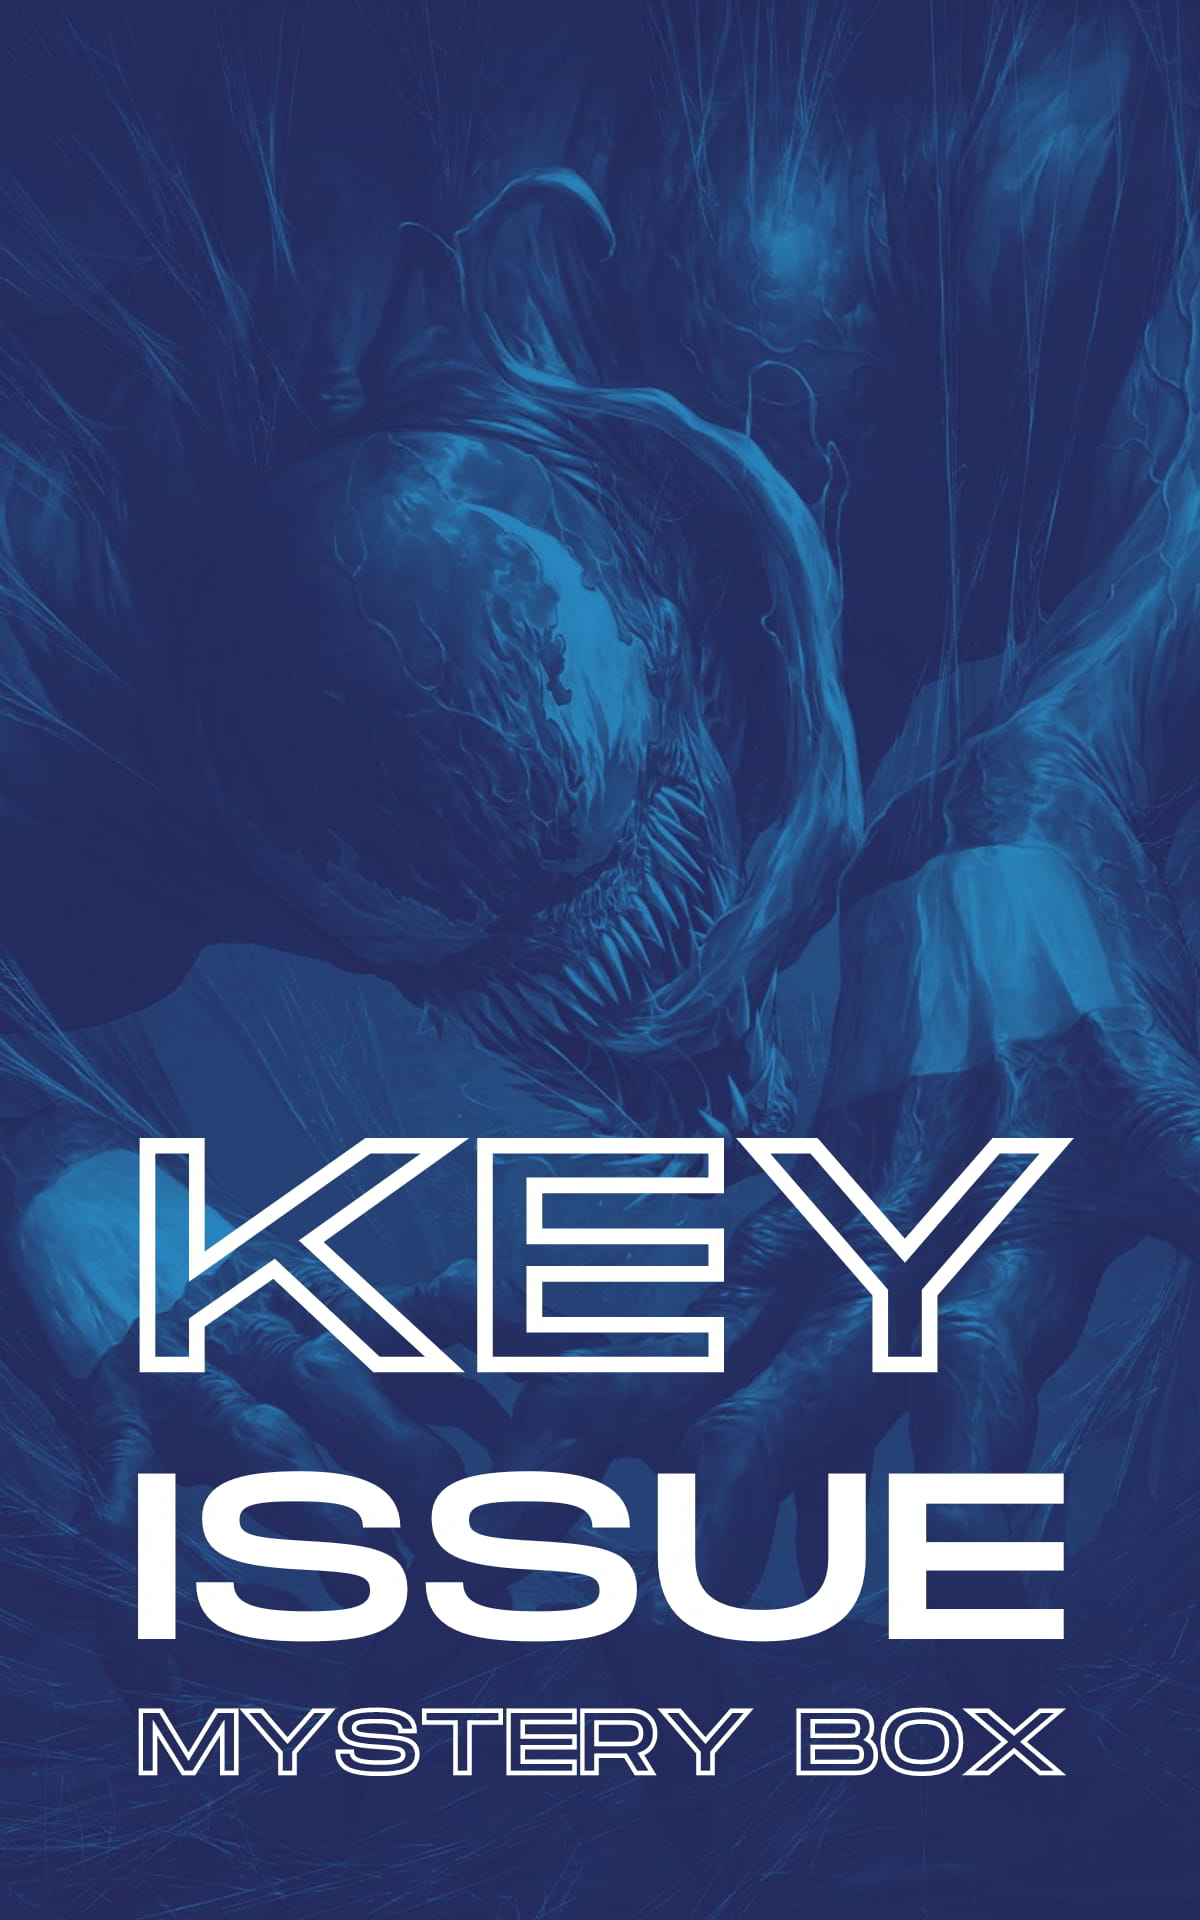 Key Issue comic mystery box